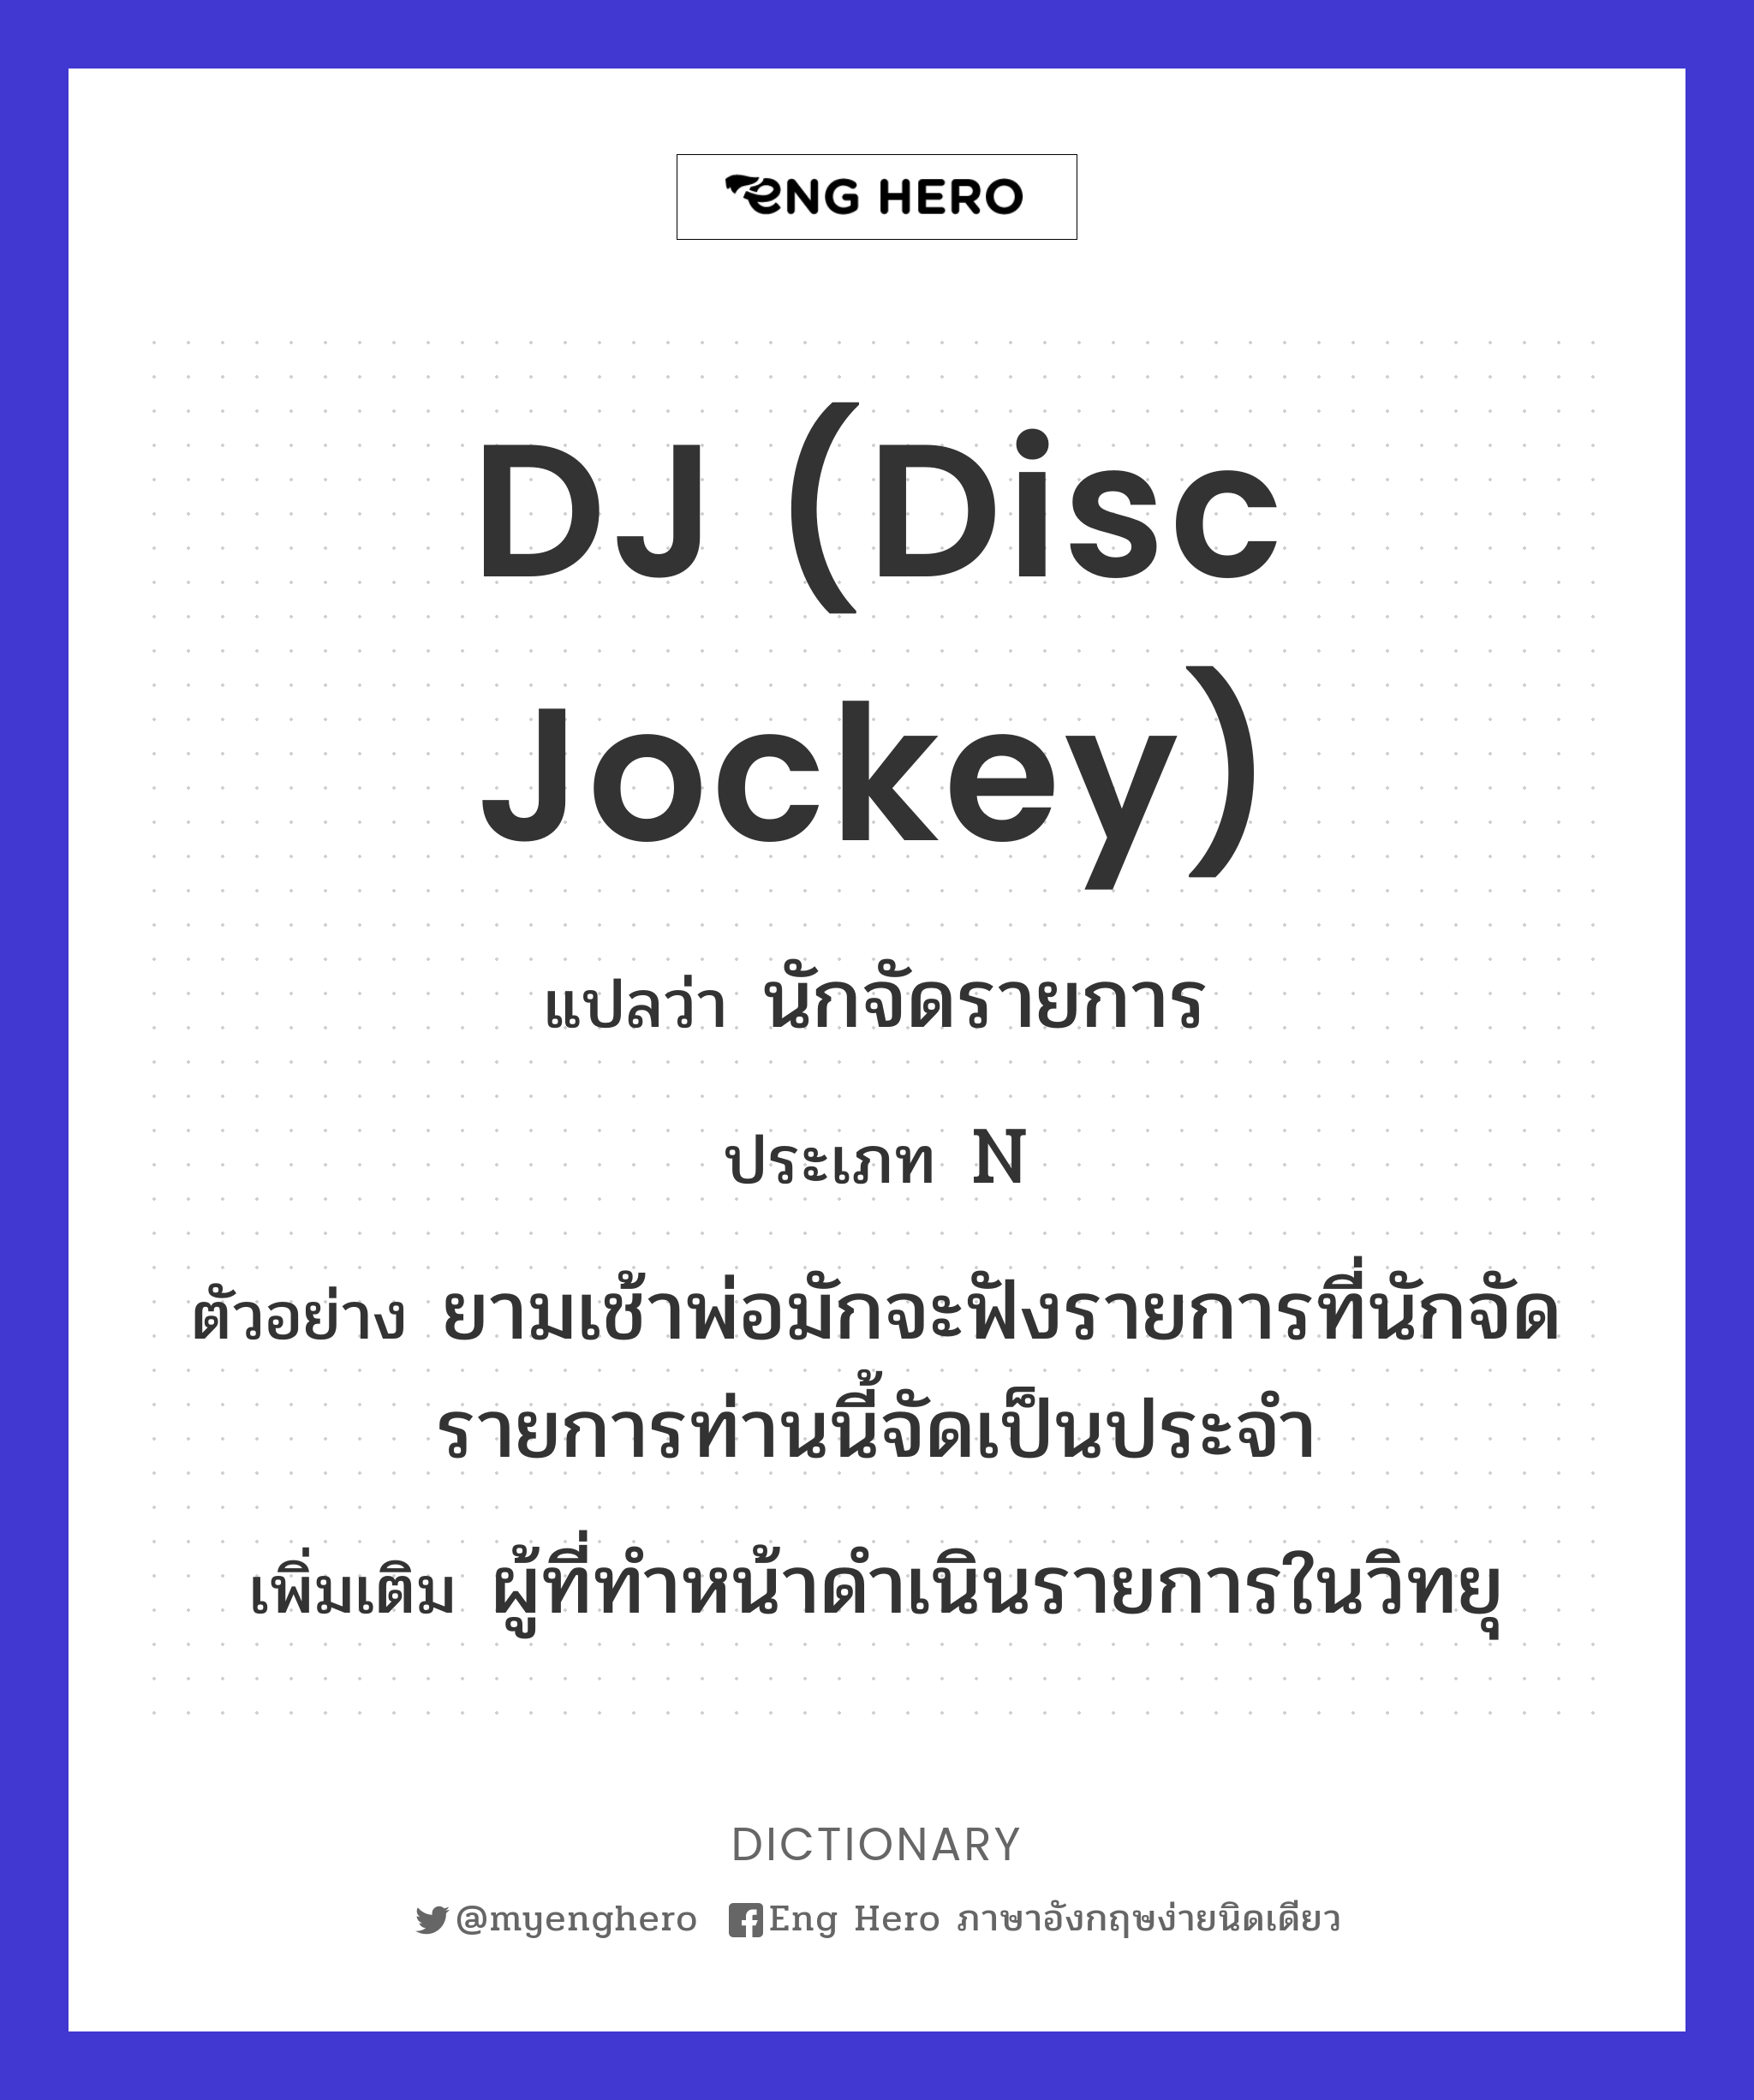 DJ (disc jockey)